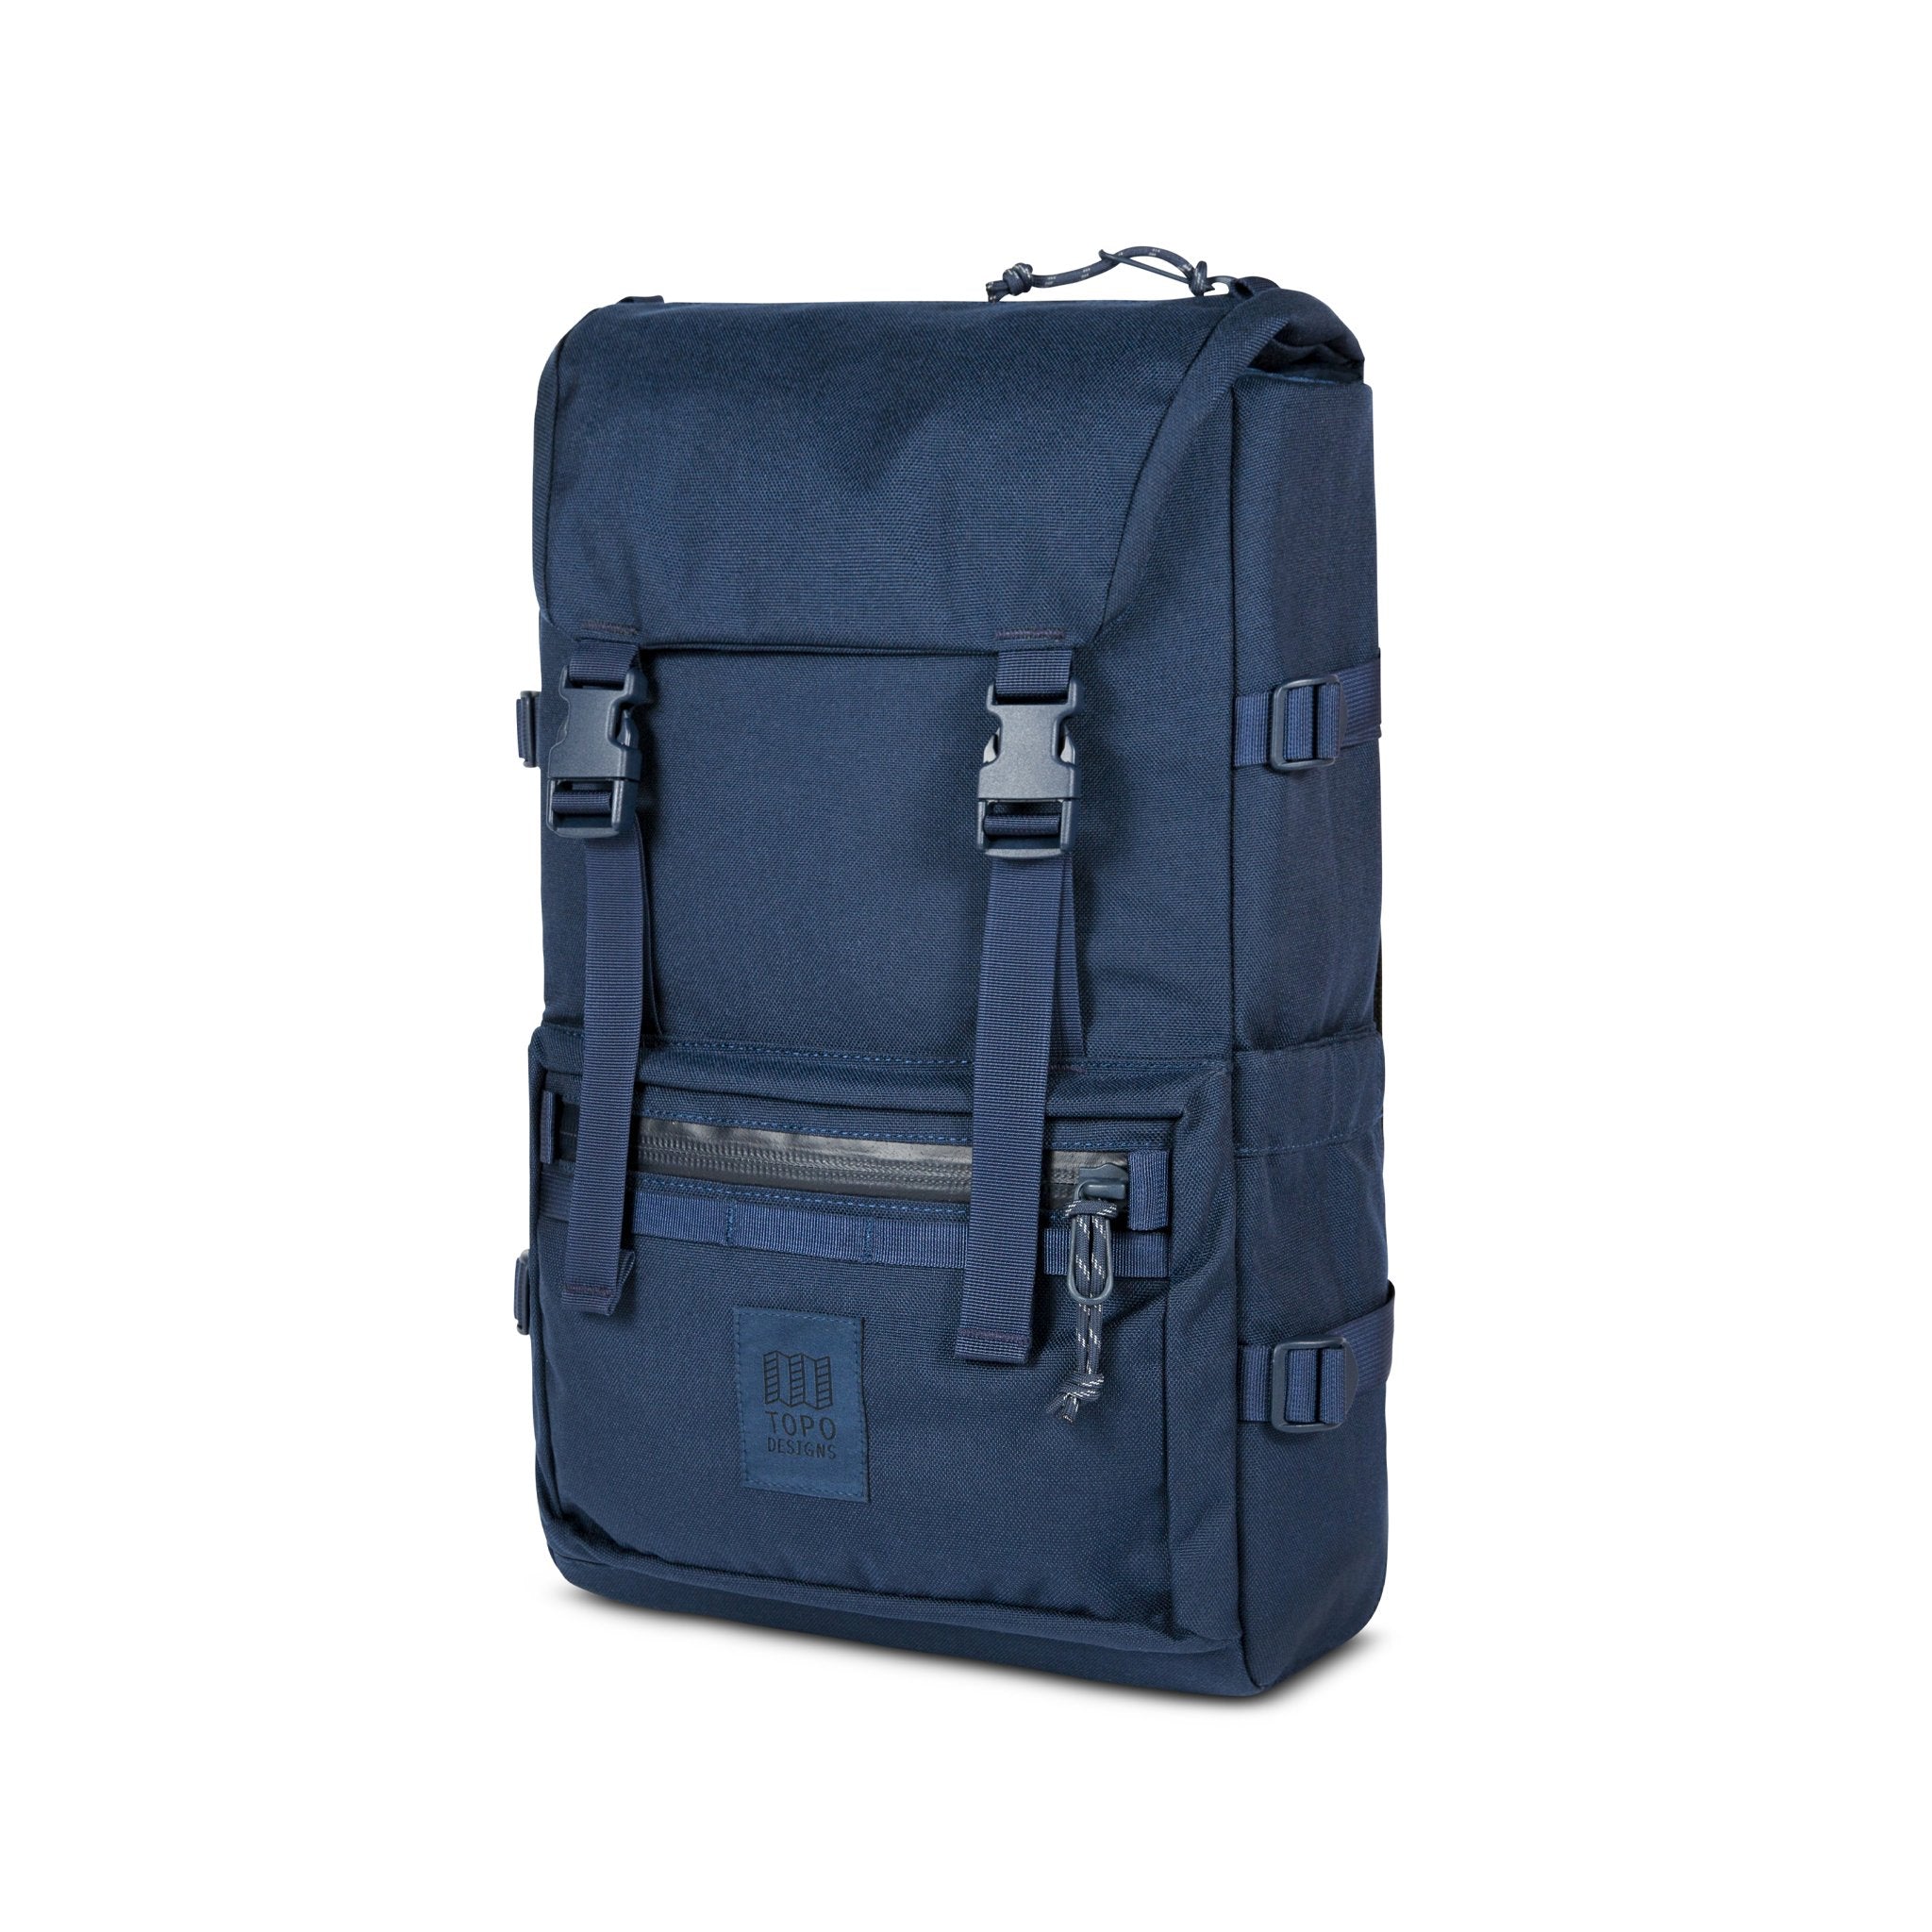 Topo Designs Rover Backpack - Custom Branded Promotional Backpacks 